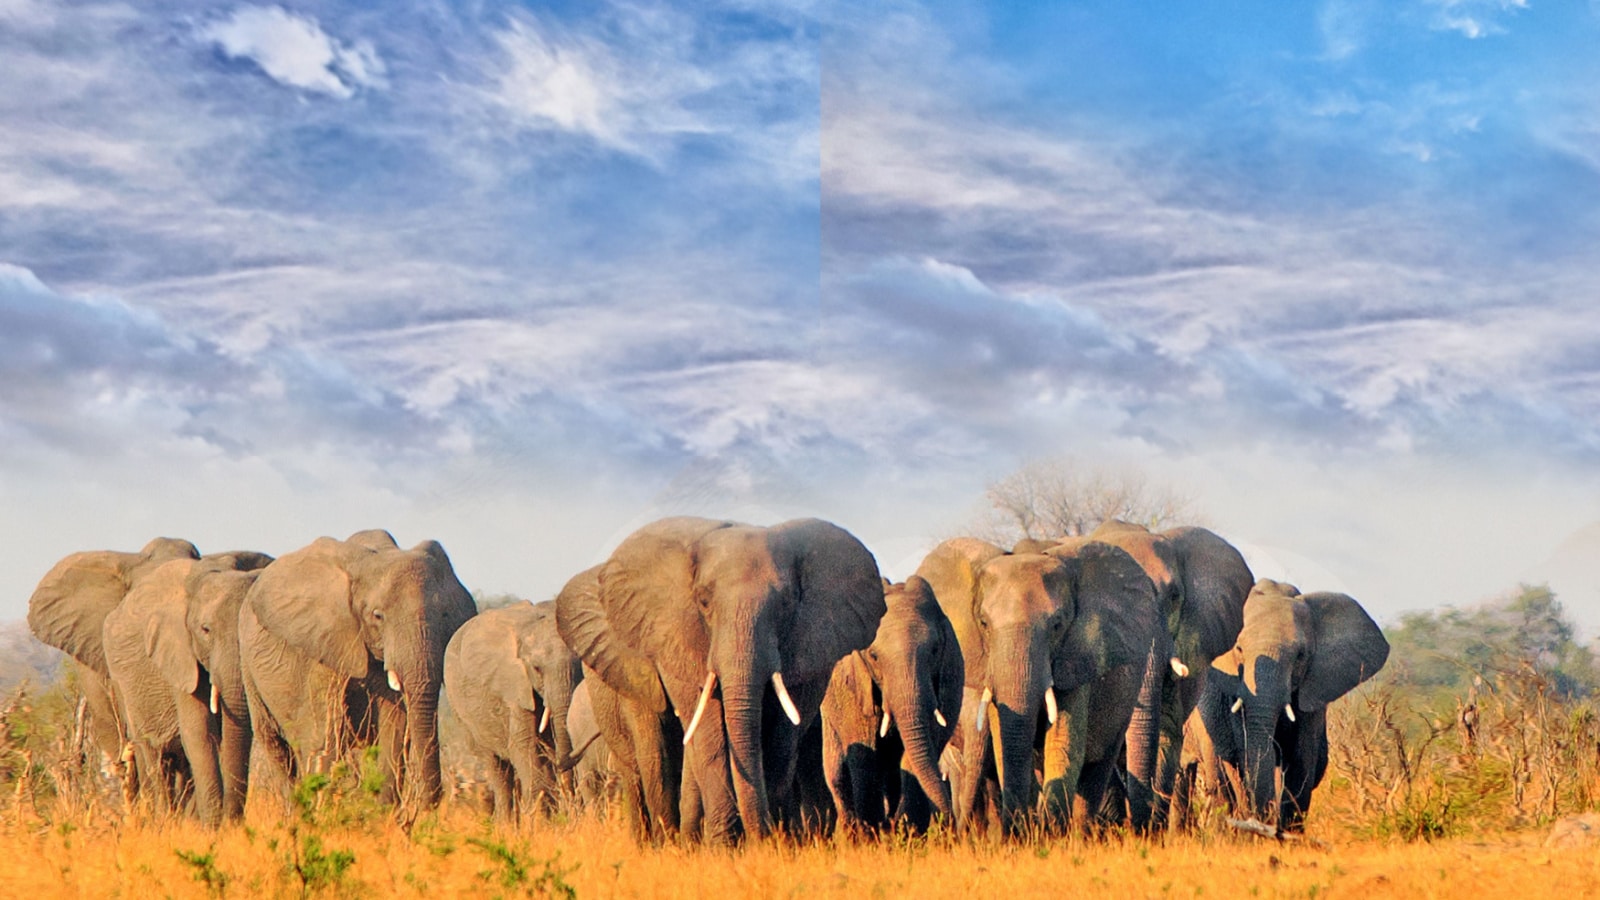 Herd of elephants walking across the dry arid african plains in Hwange National Park, Zimbabwe